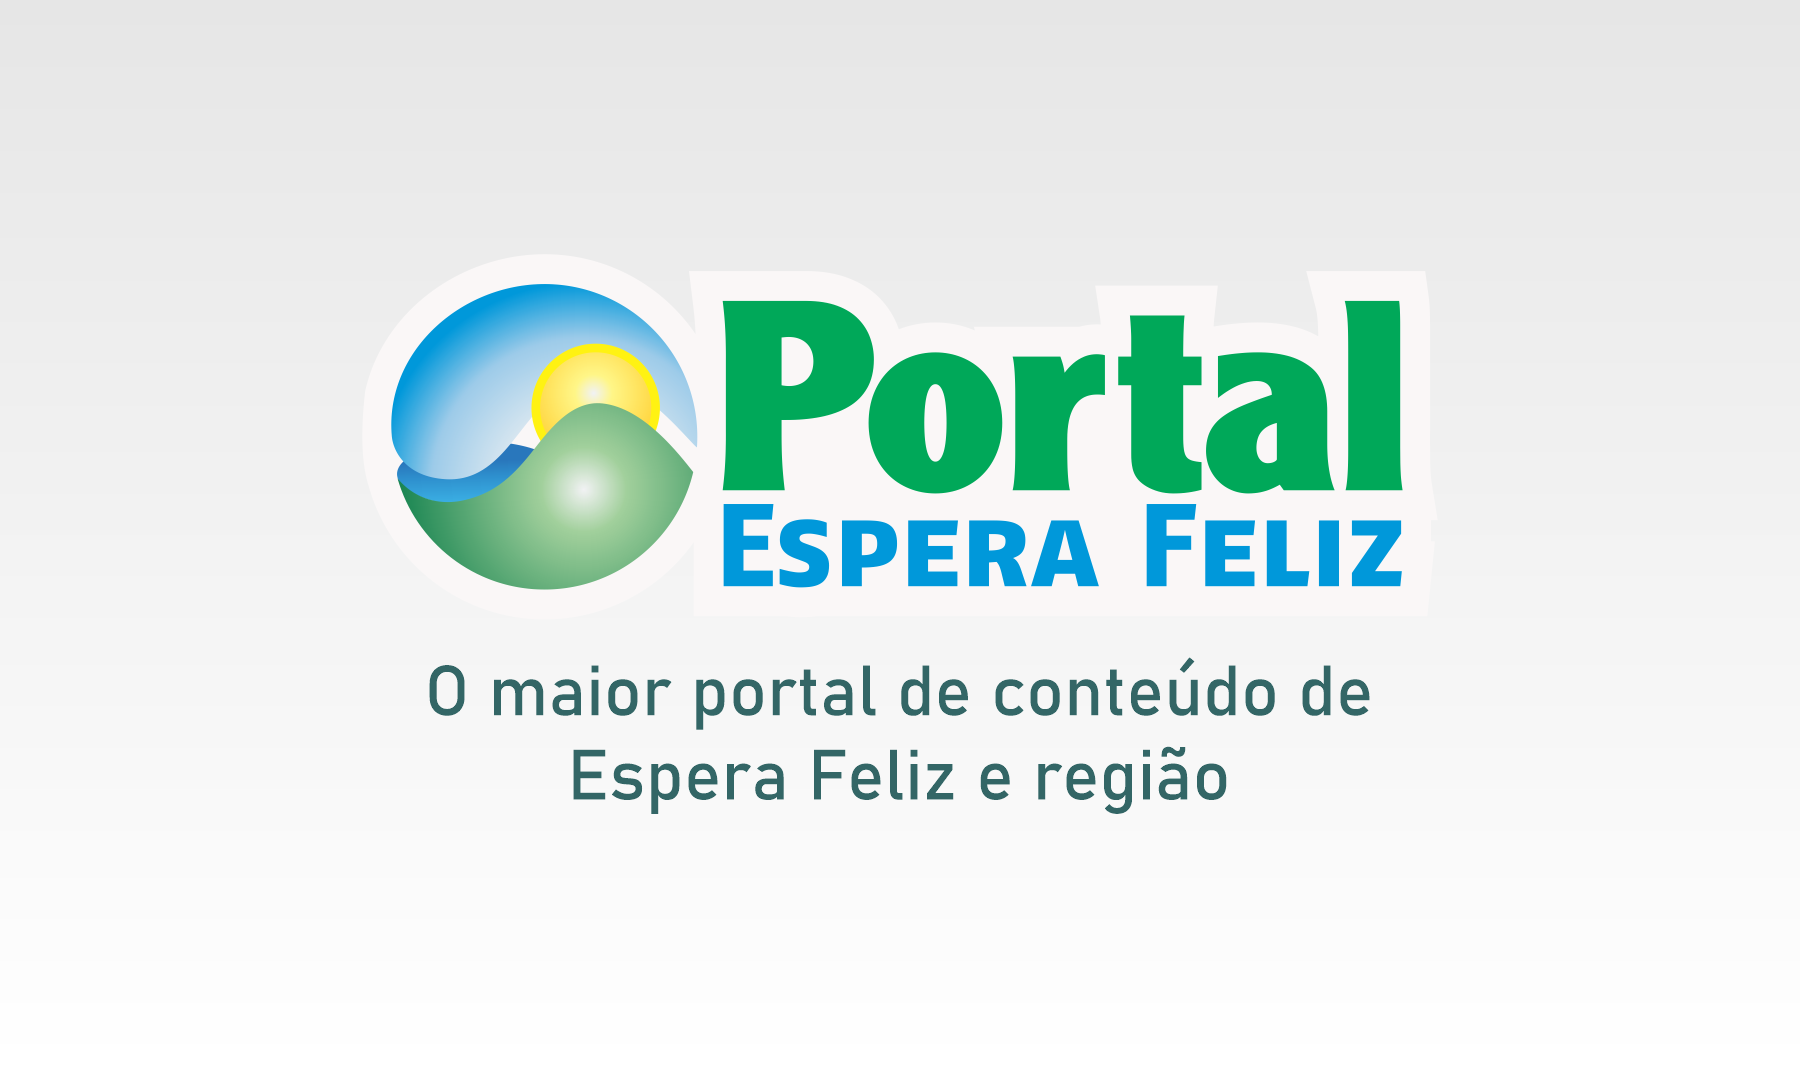 (c) Portalesperafeliz.com.br